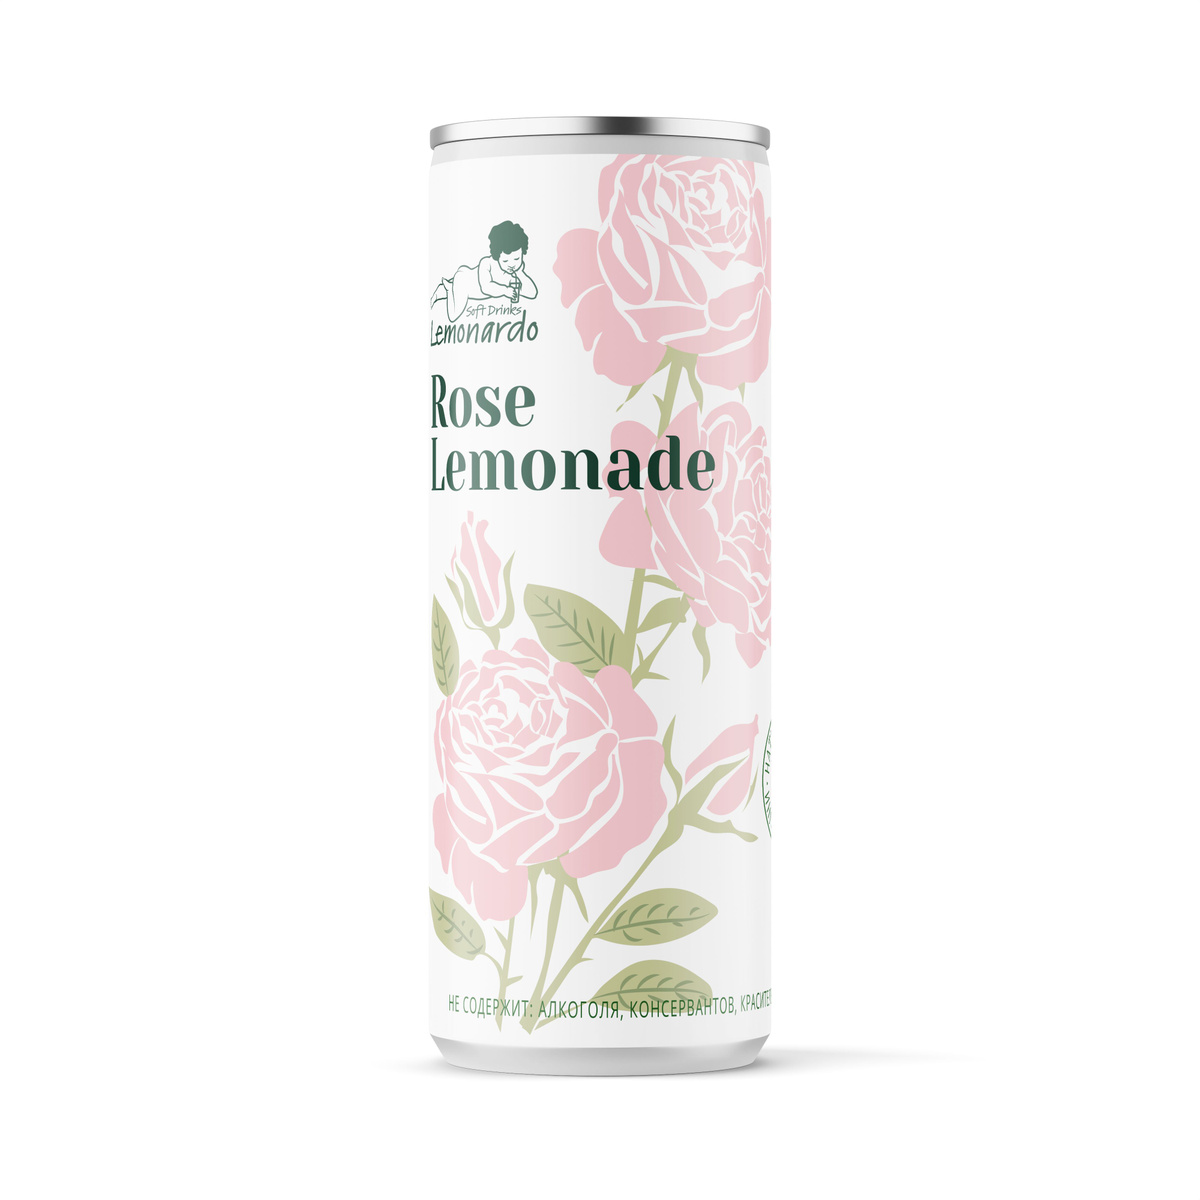 Розовый лимонад без сахара / Lemonardo Rose Lemonade